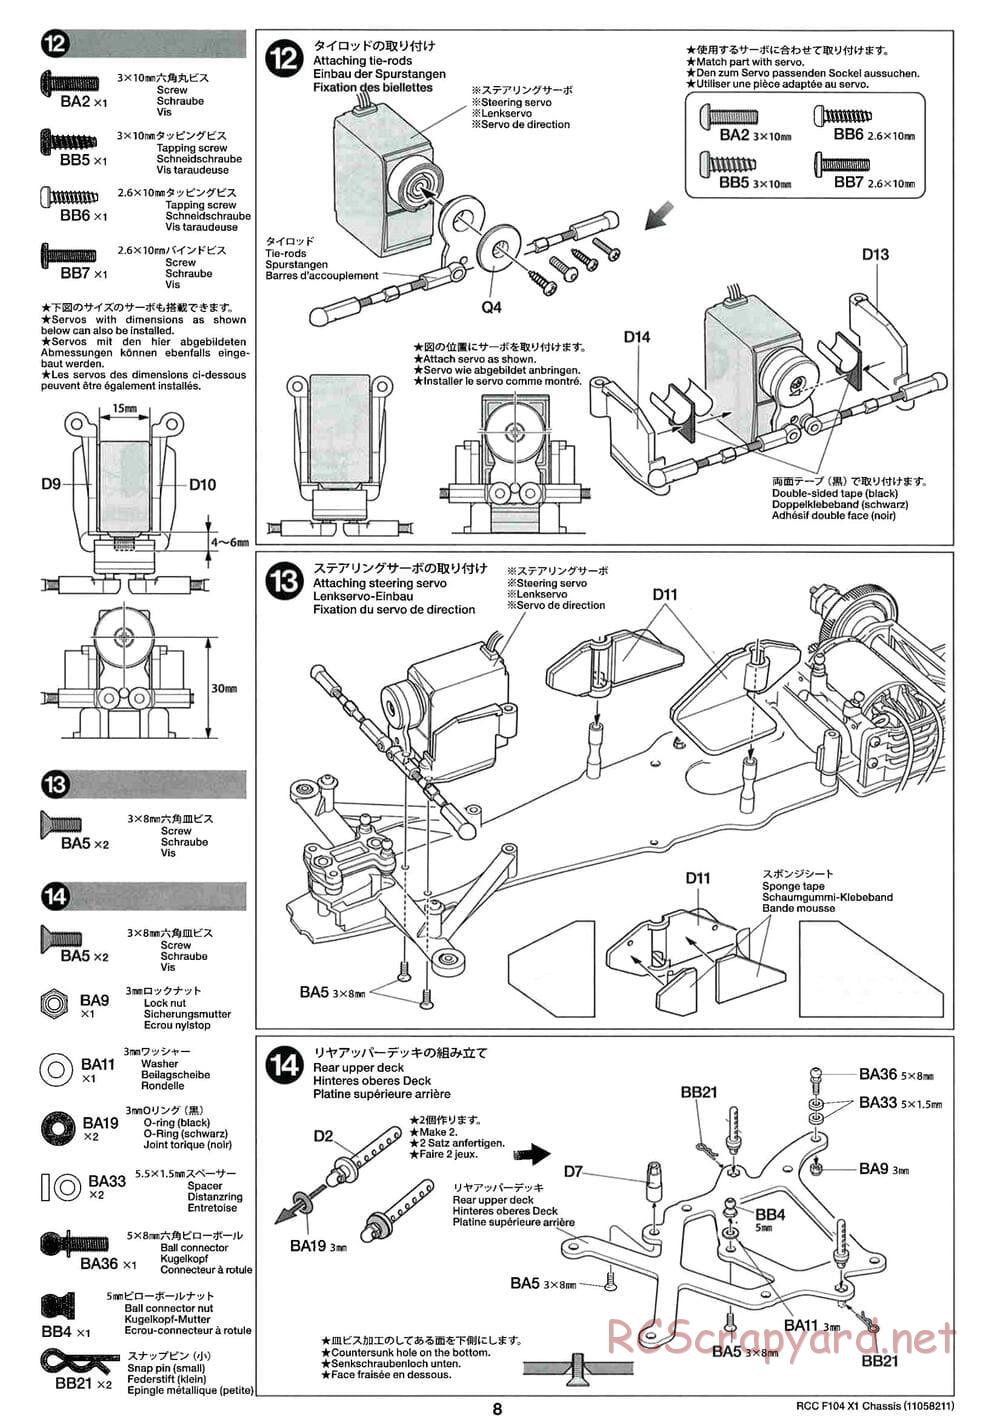 Tamiya - F104X1 Chassis - Manual - Page 8